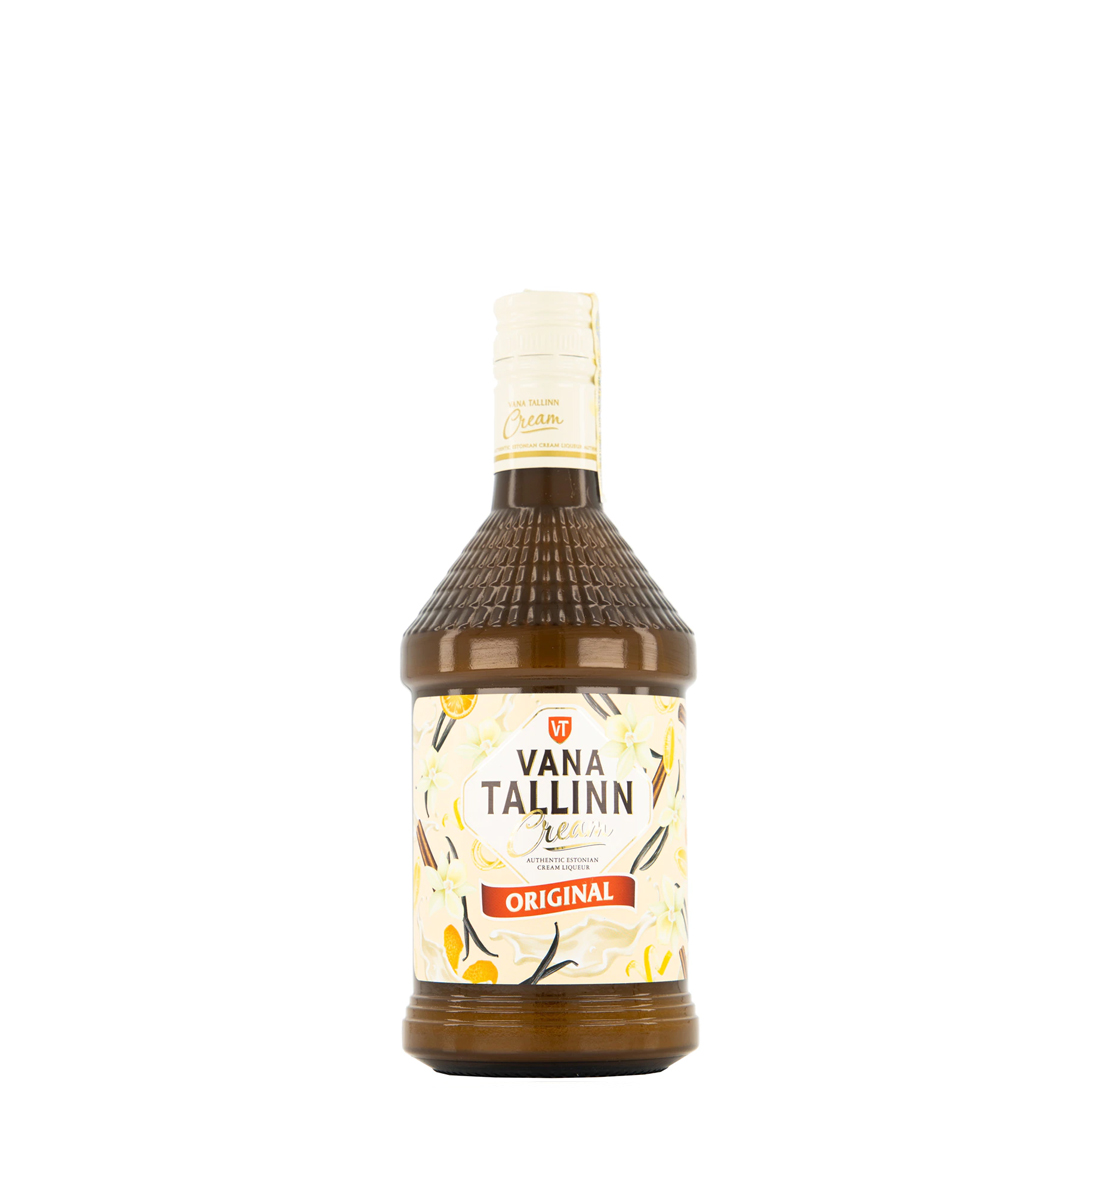 Vana Tallinn Original Cream 0.5L